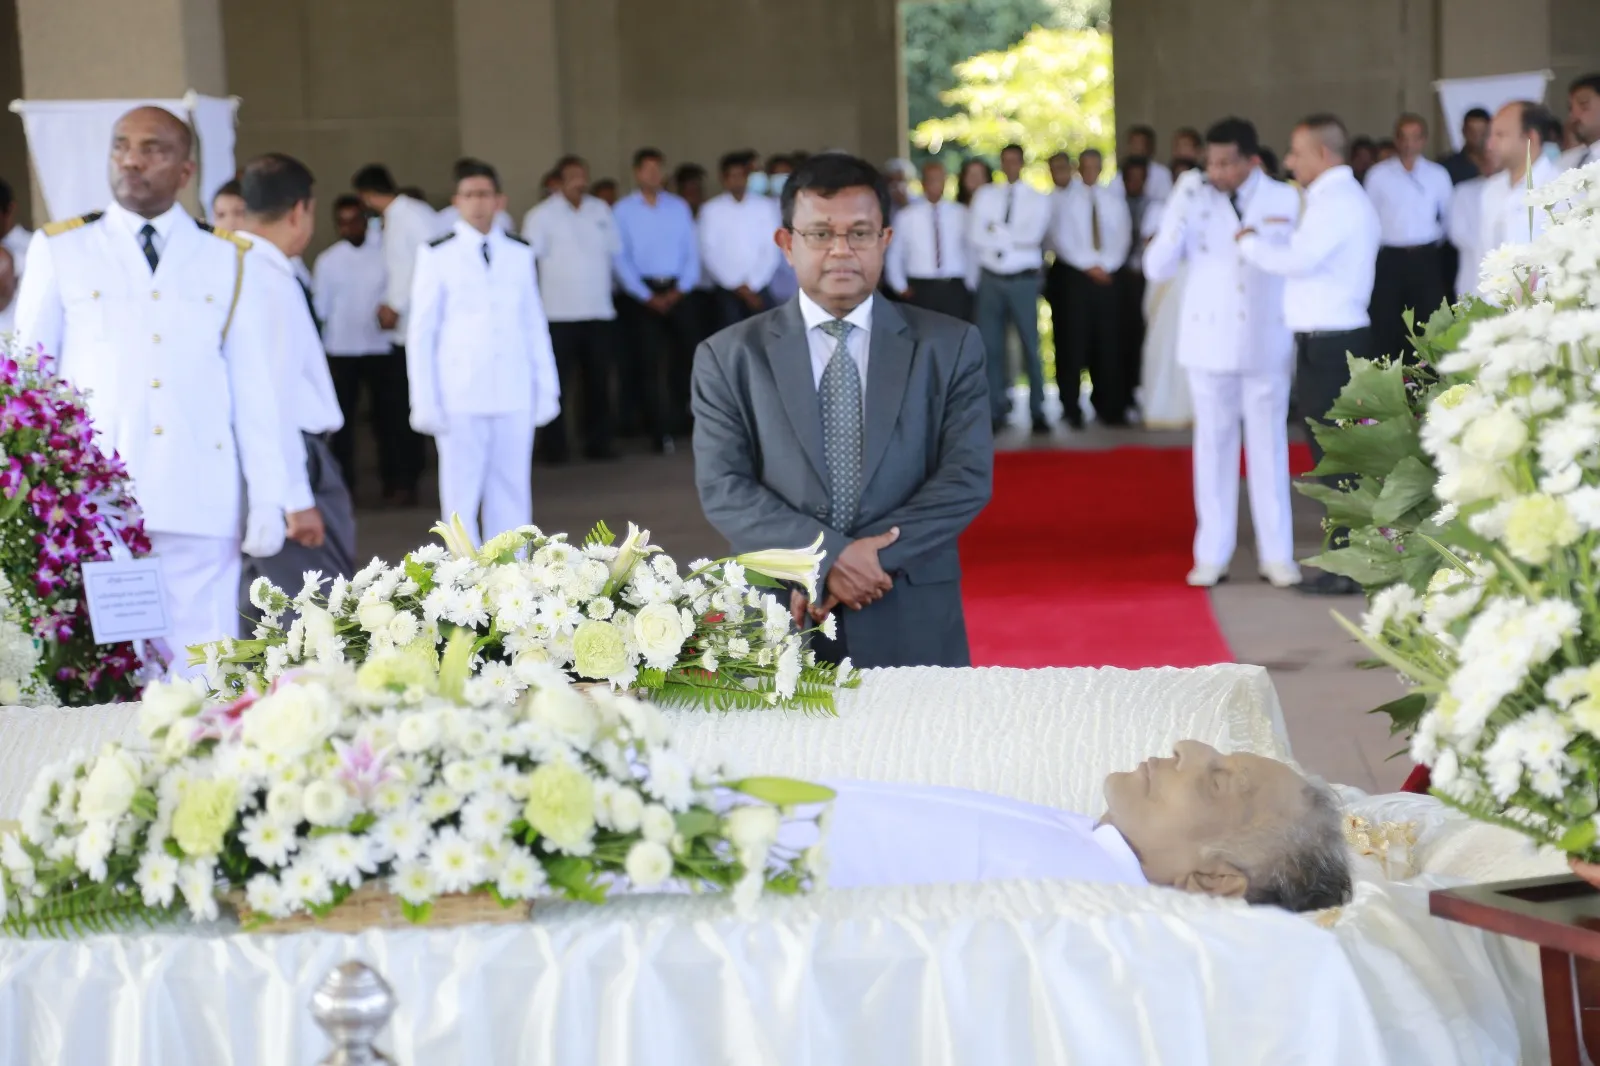 Funeral of Hon. Joseph Michael Perera 20230330 2 1